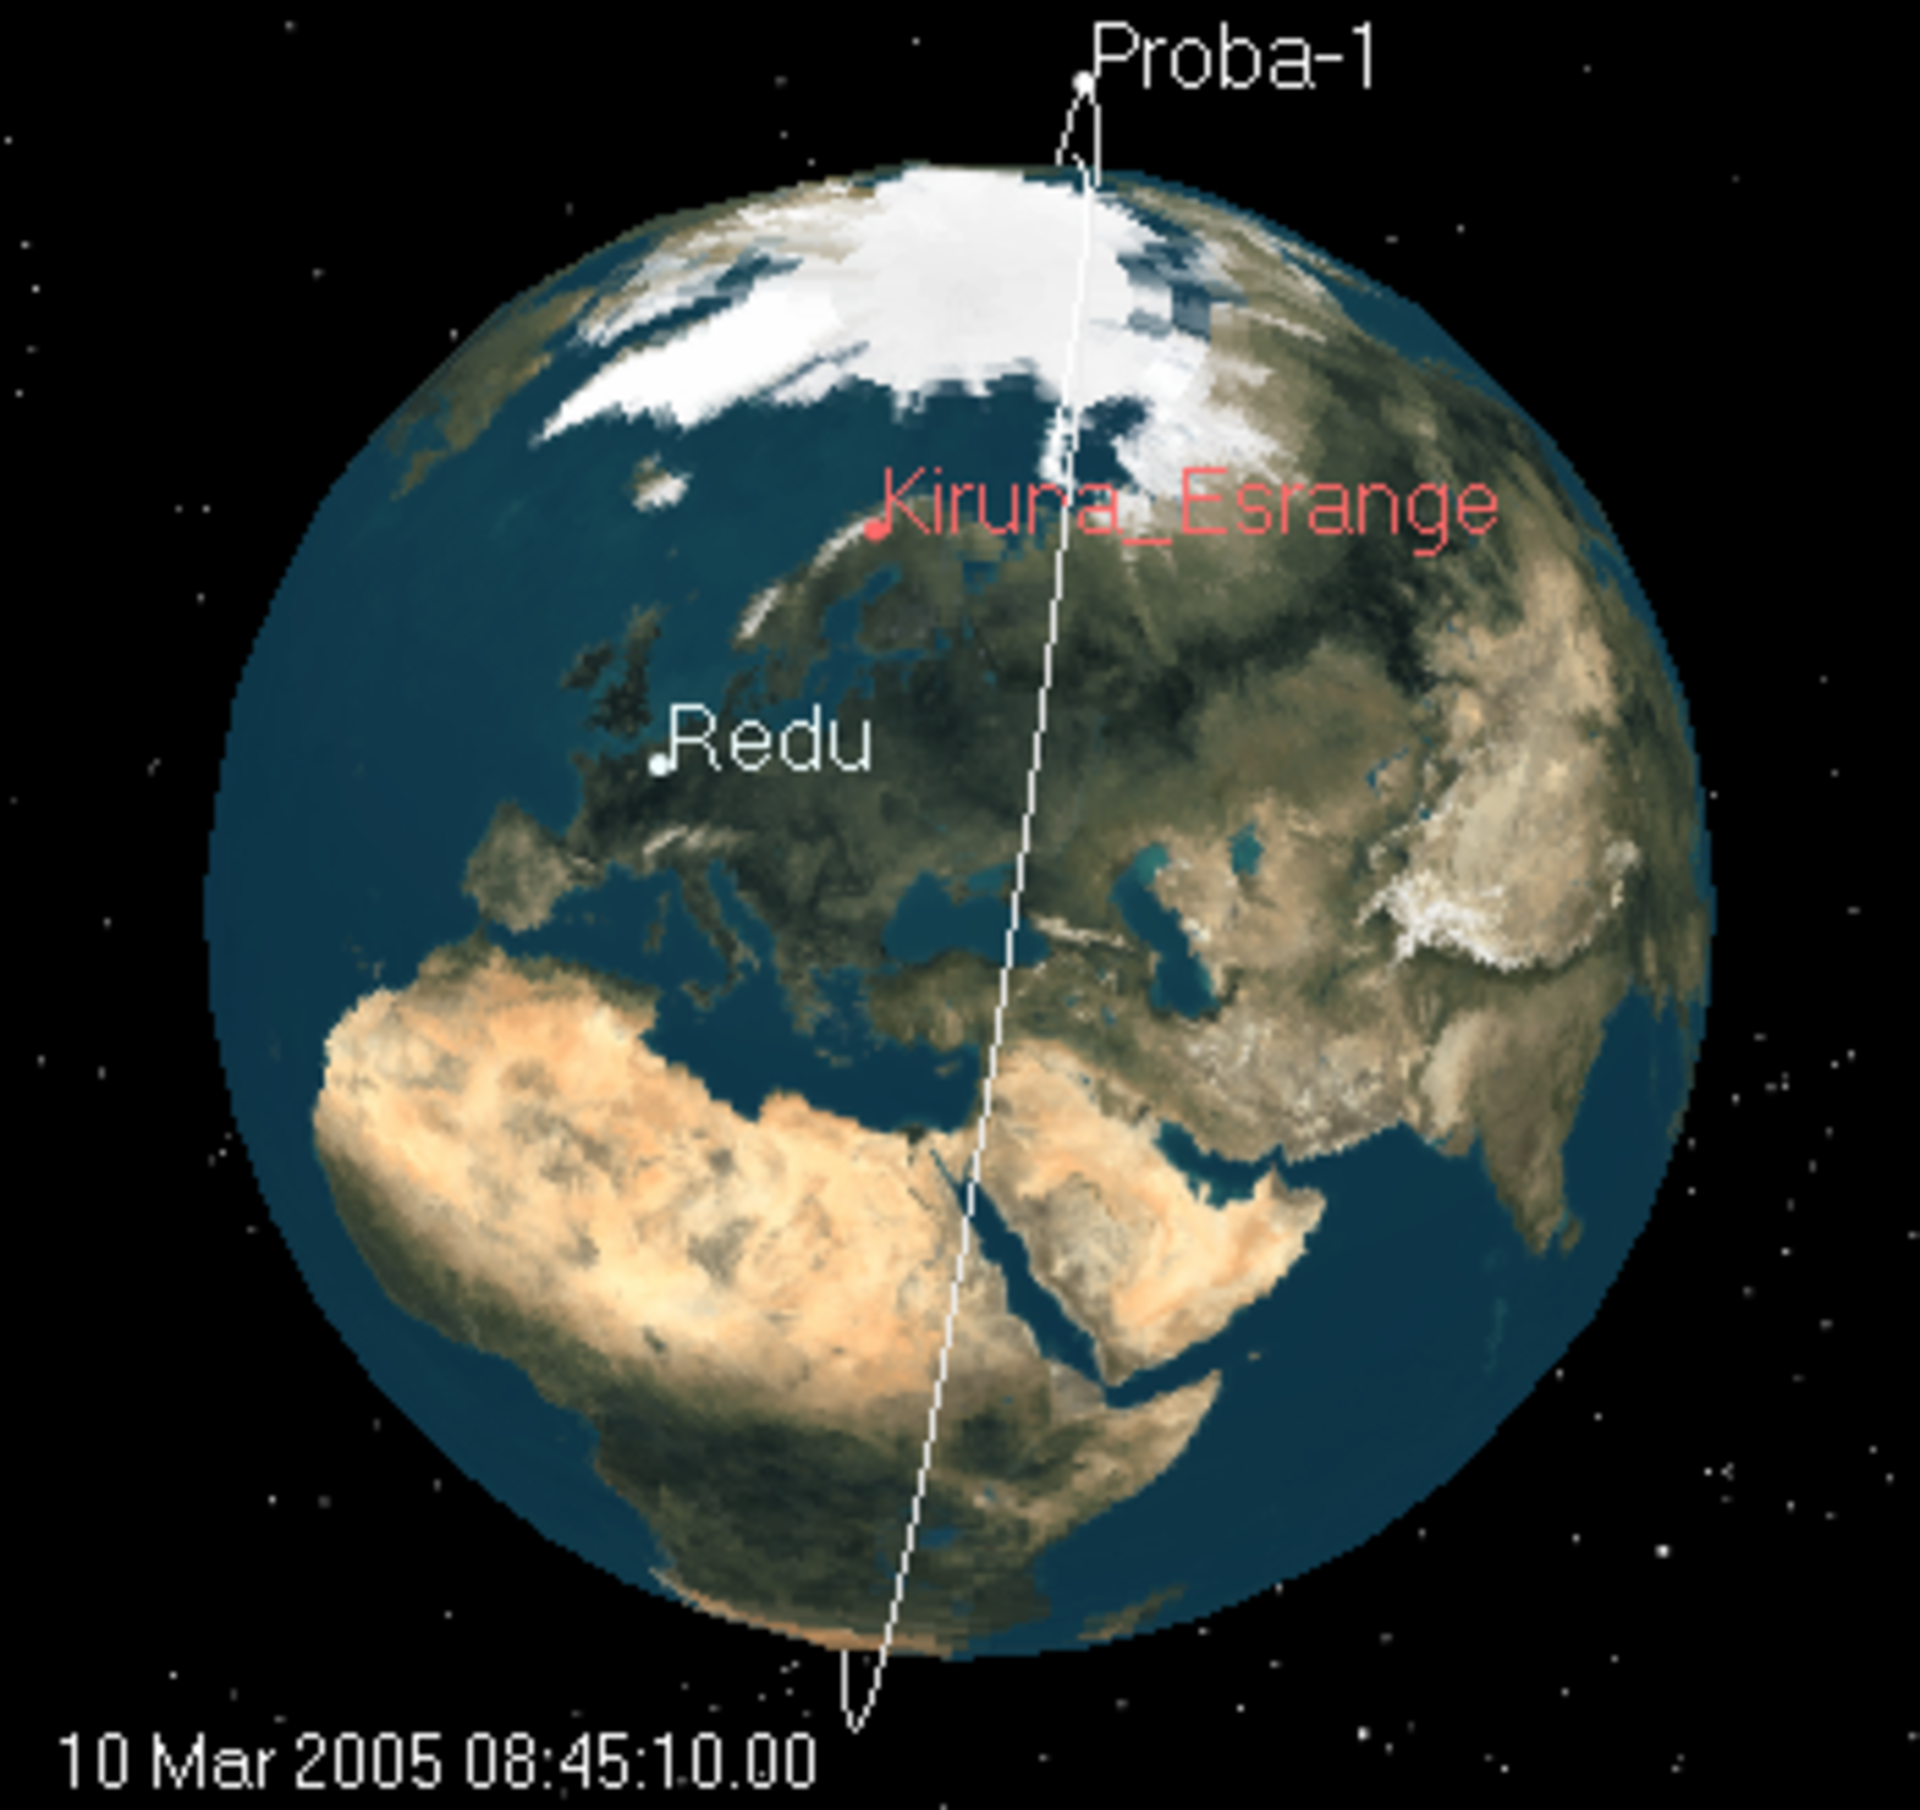 Representation of Proba's orbit